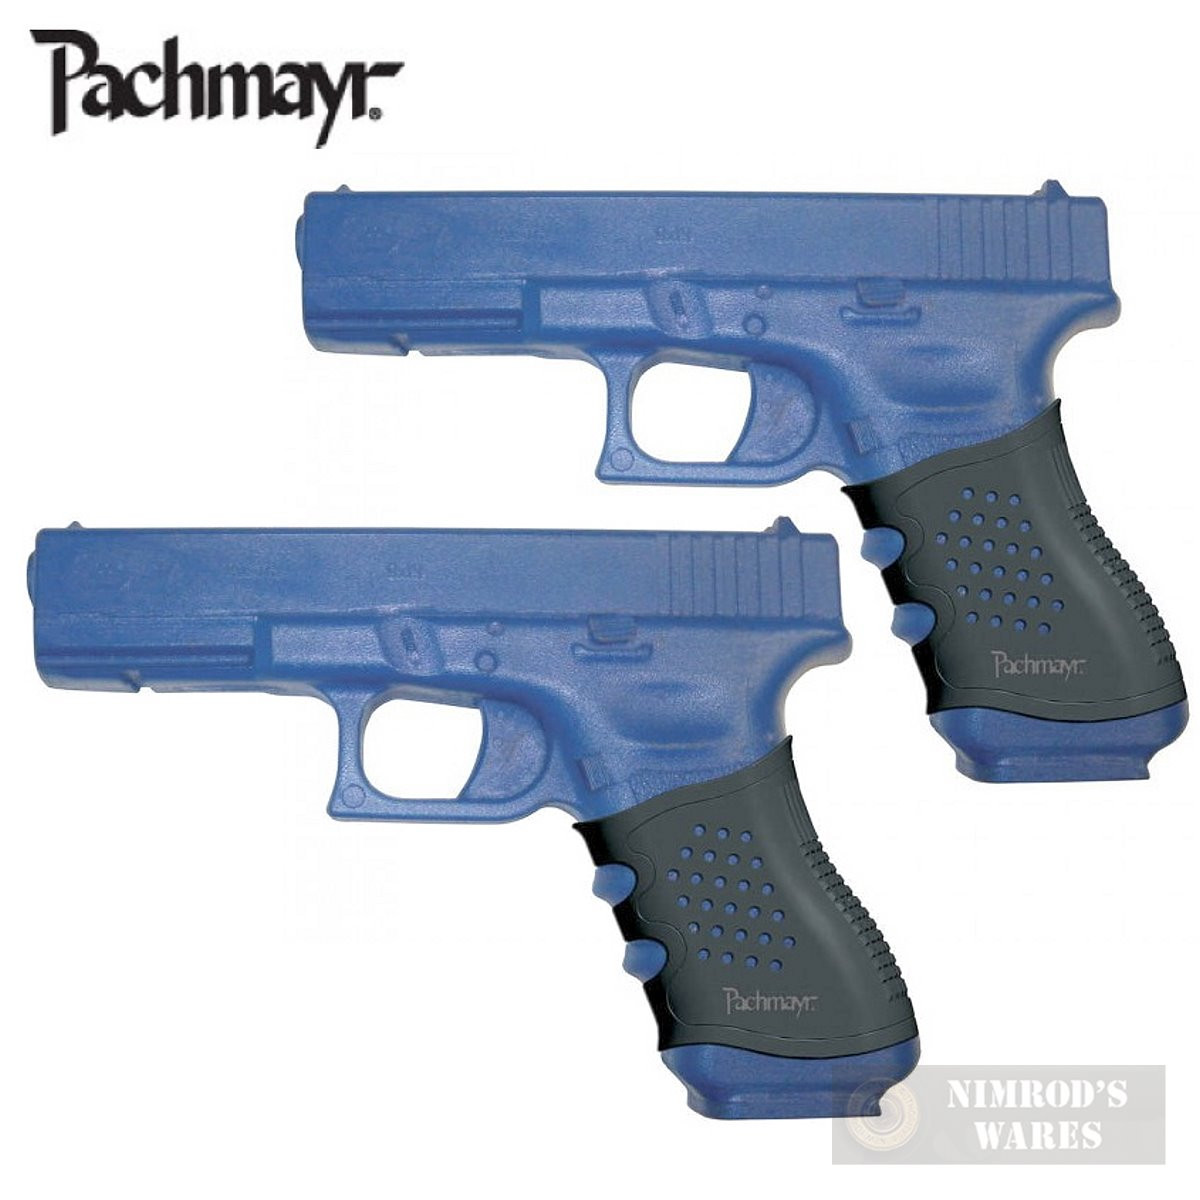 22 31 20 21 Pachmayr Tactical Grip Glove Slip On Sleeve Glock17 34 # 05164 